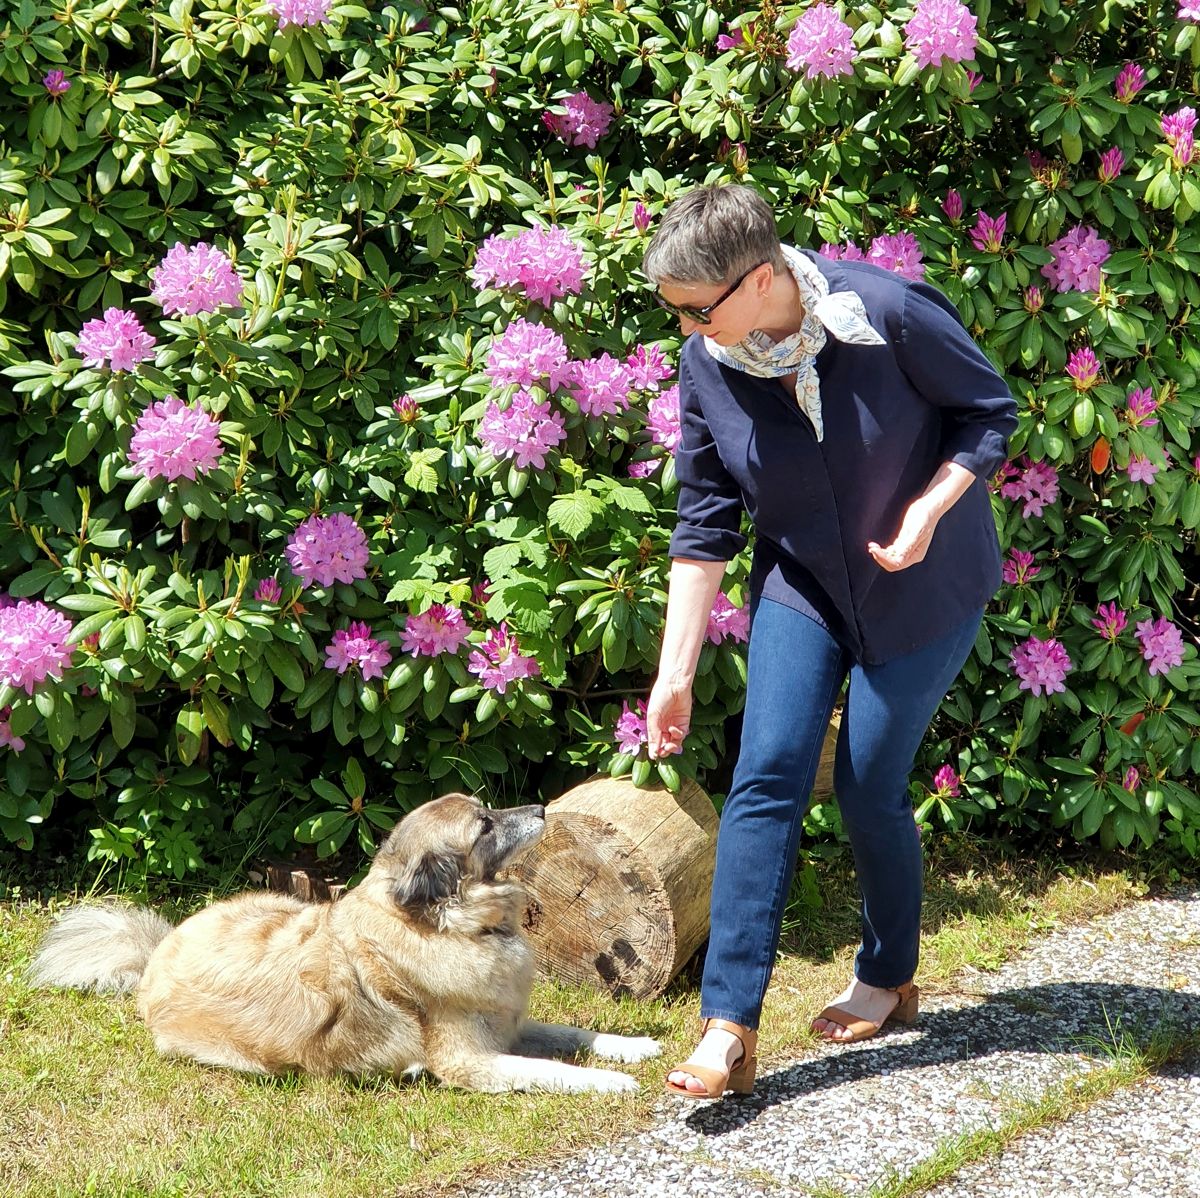 Ines Meyrose - Outfit 2021 - Frühlingseinheitslook - persönliche Uniform - dunkelblaue Bluse, dunkelblaue Jeans, Sandalen - Ü50 Bloggerin mit Hund Paul